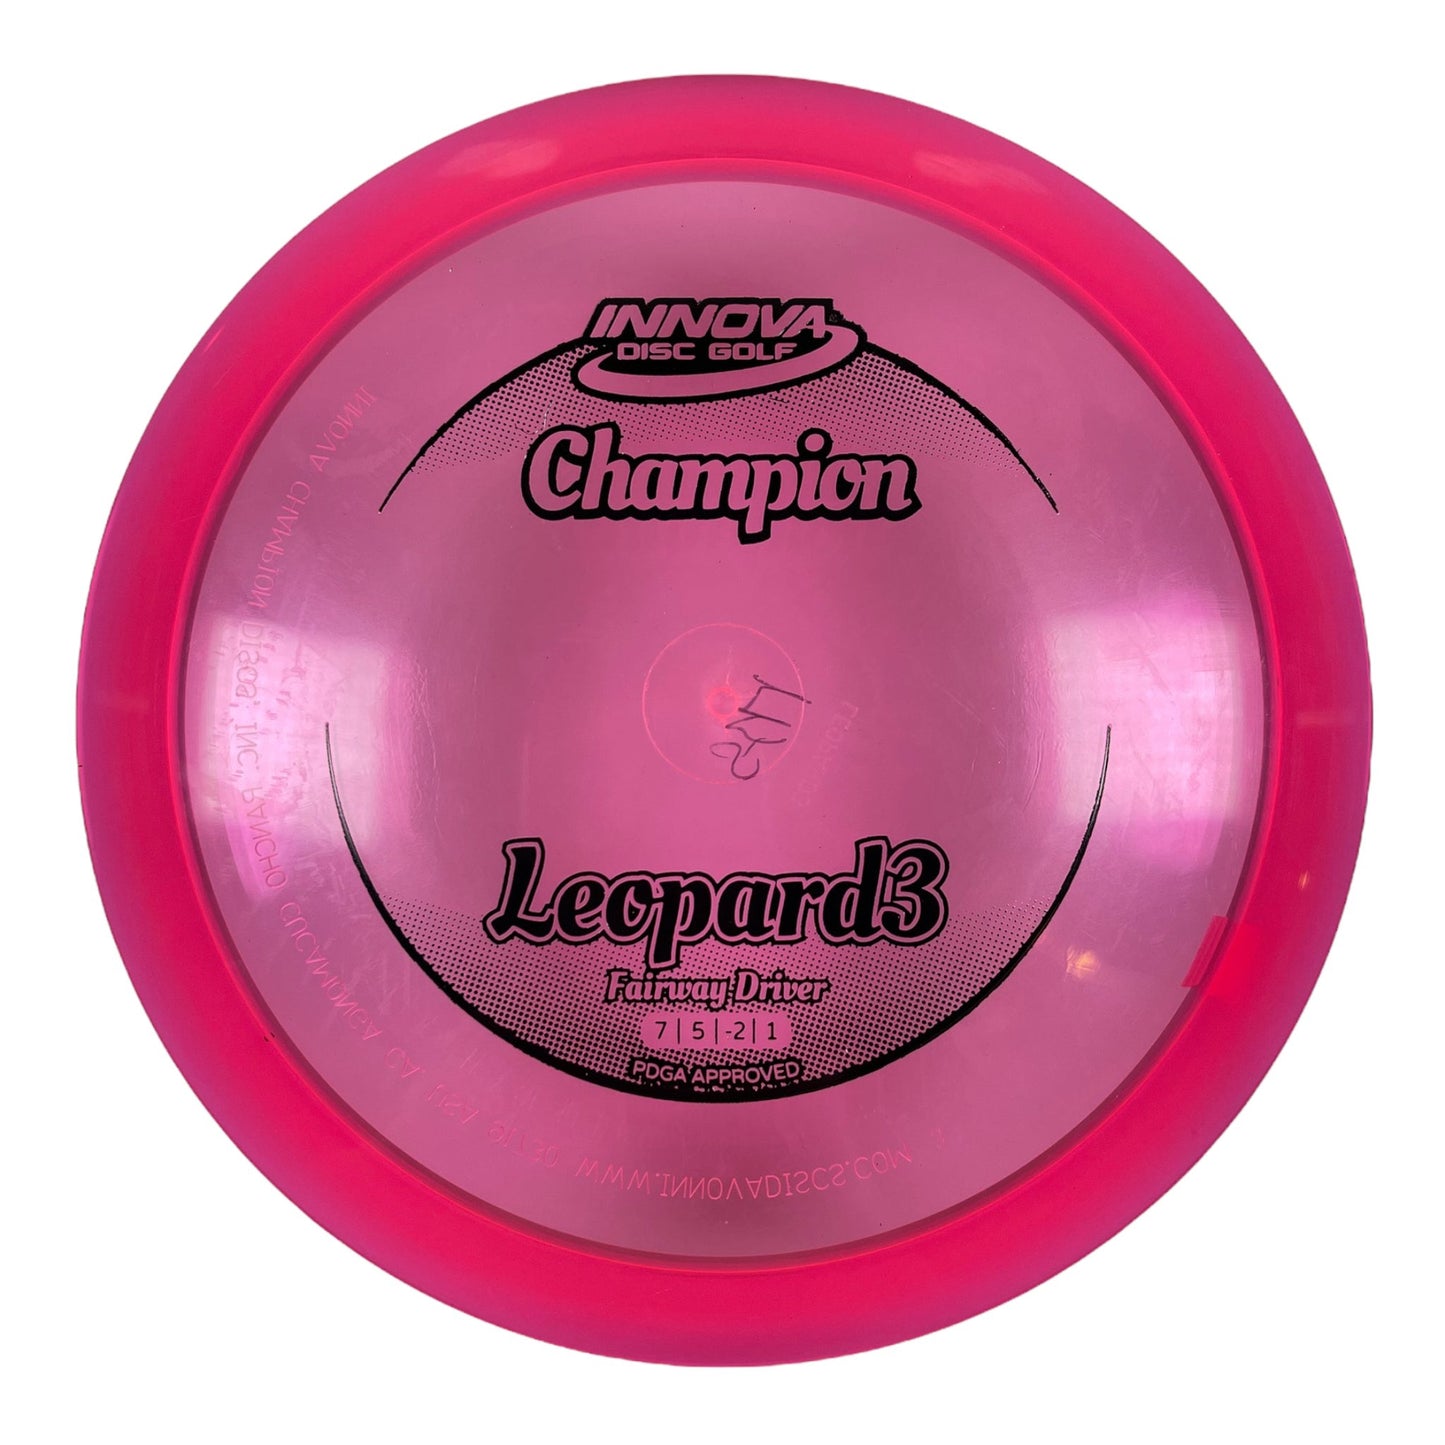 Innova Champion Discs Leopard3 | Champion | Pink/Black 175g Disc Golf